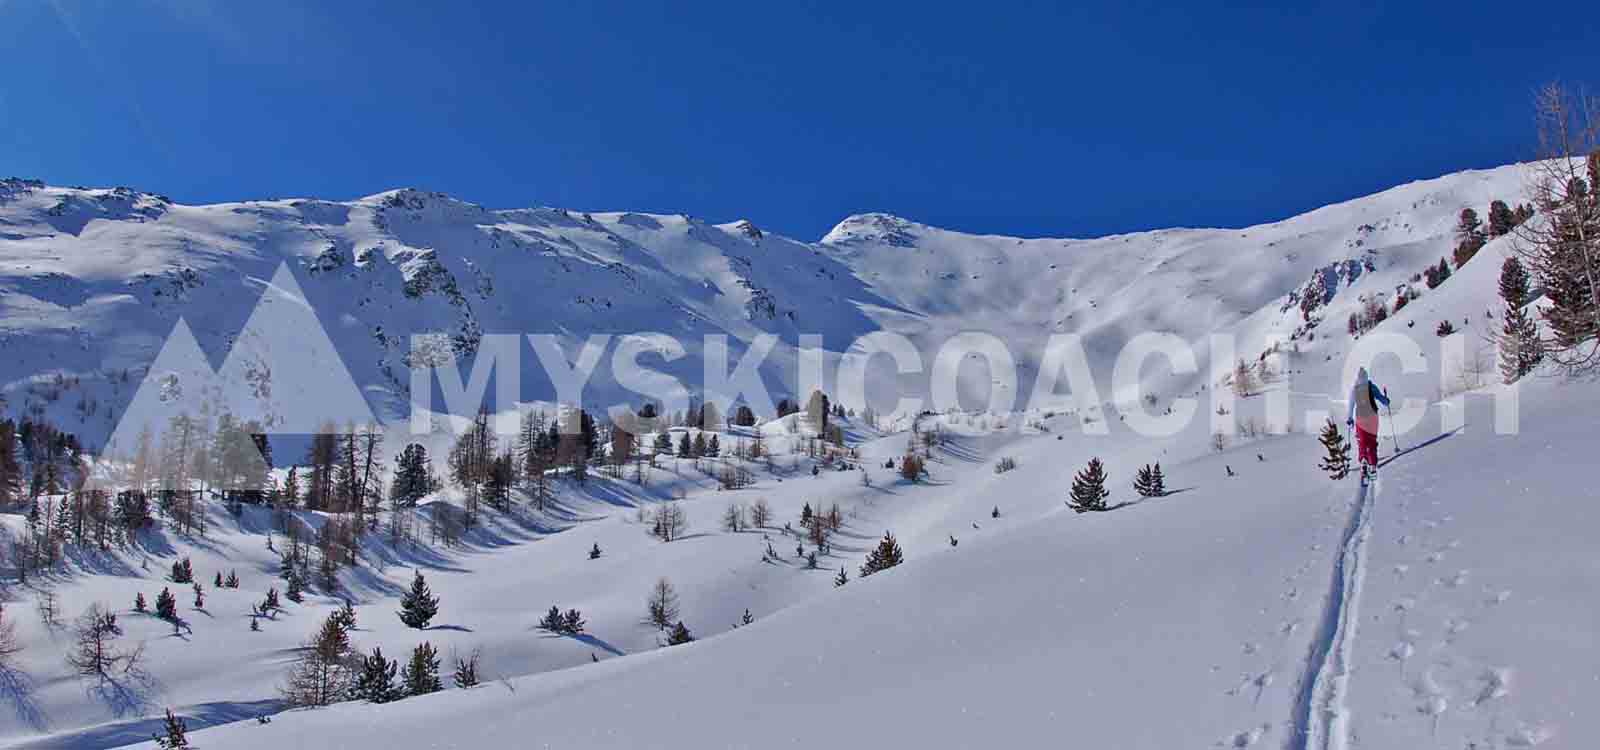 [:fr]Initiation randonnée à ski pour débutants ¦ MySkiCoach.ch[:en]Backcountry skiing instruction for beginners ¦ MySkiCoach.ch[:]